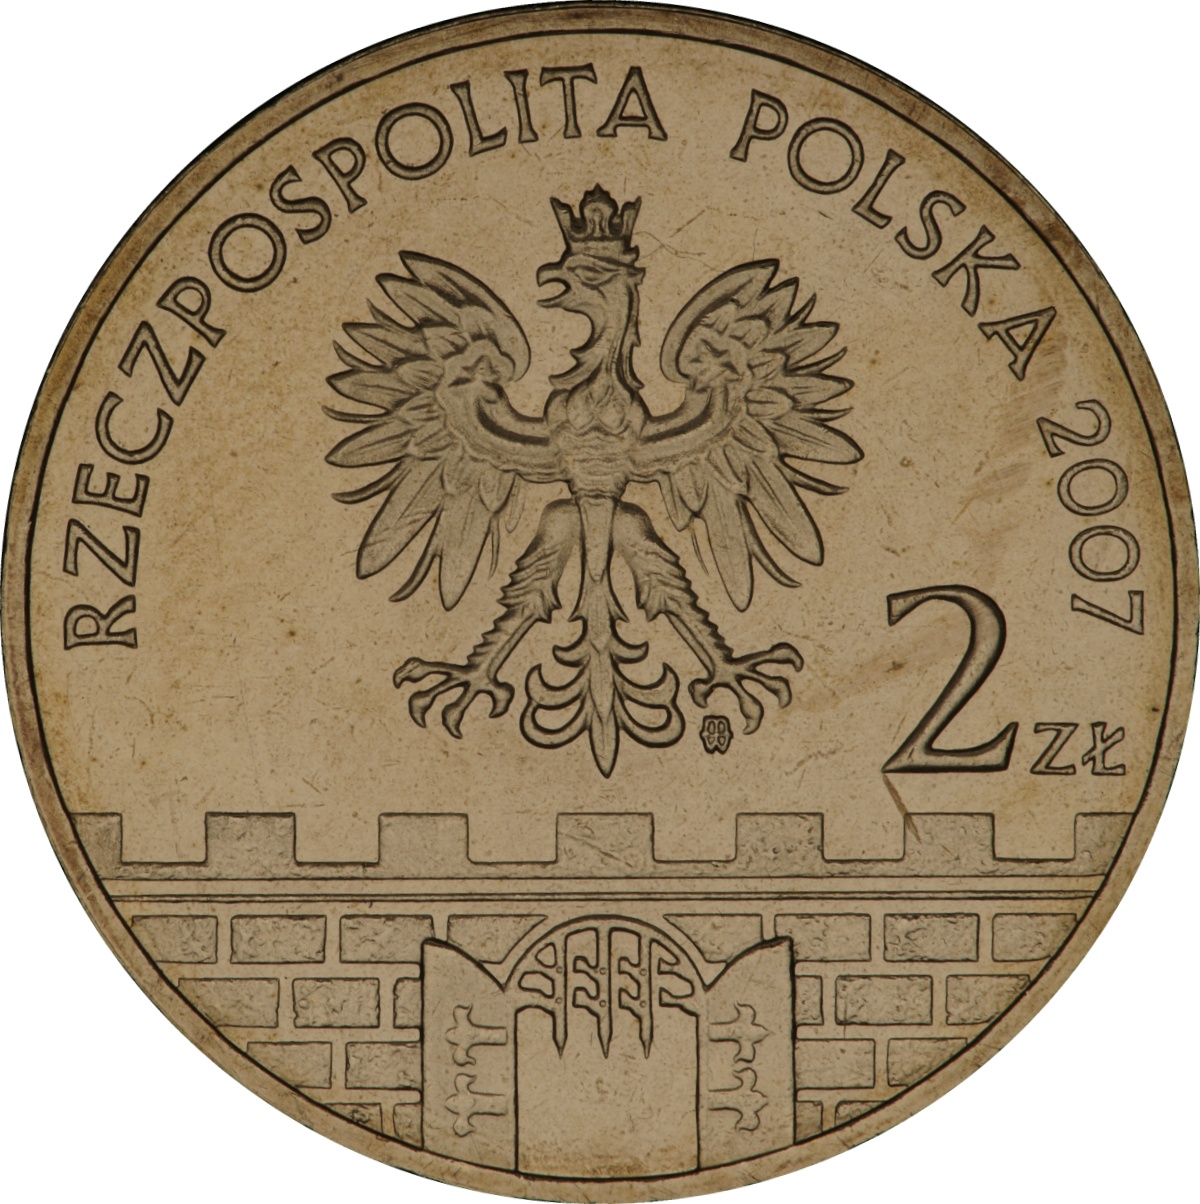 2zl-raciborz-awers-monety